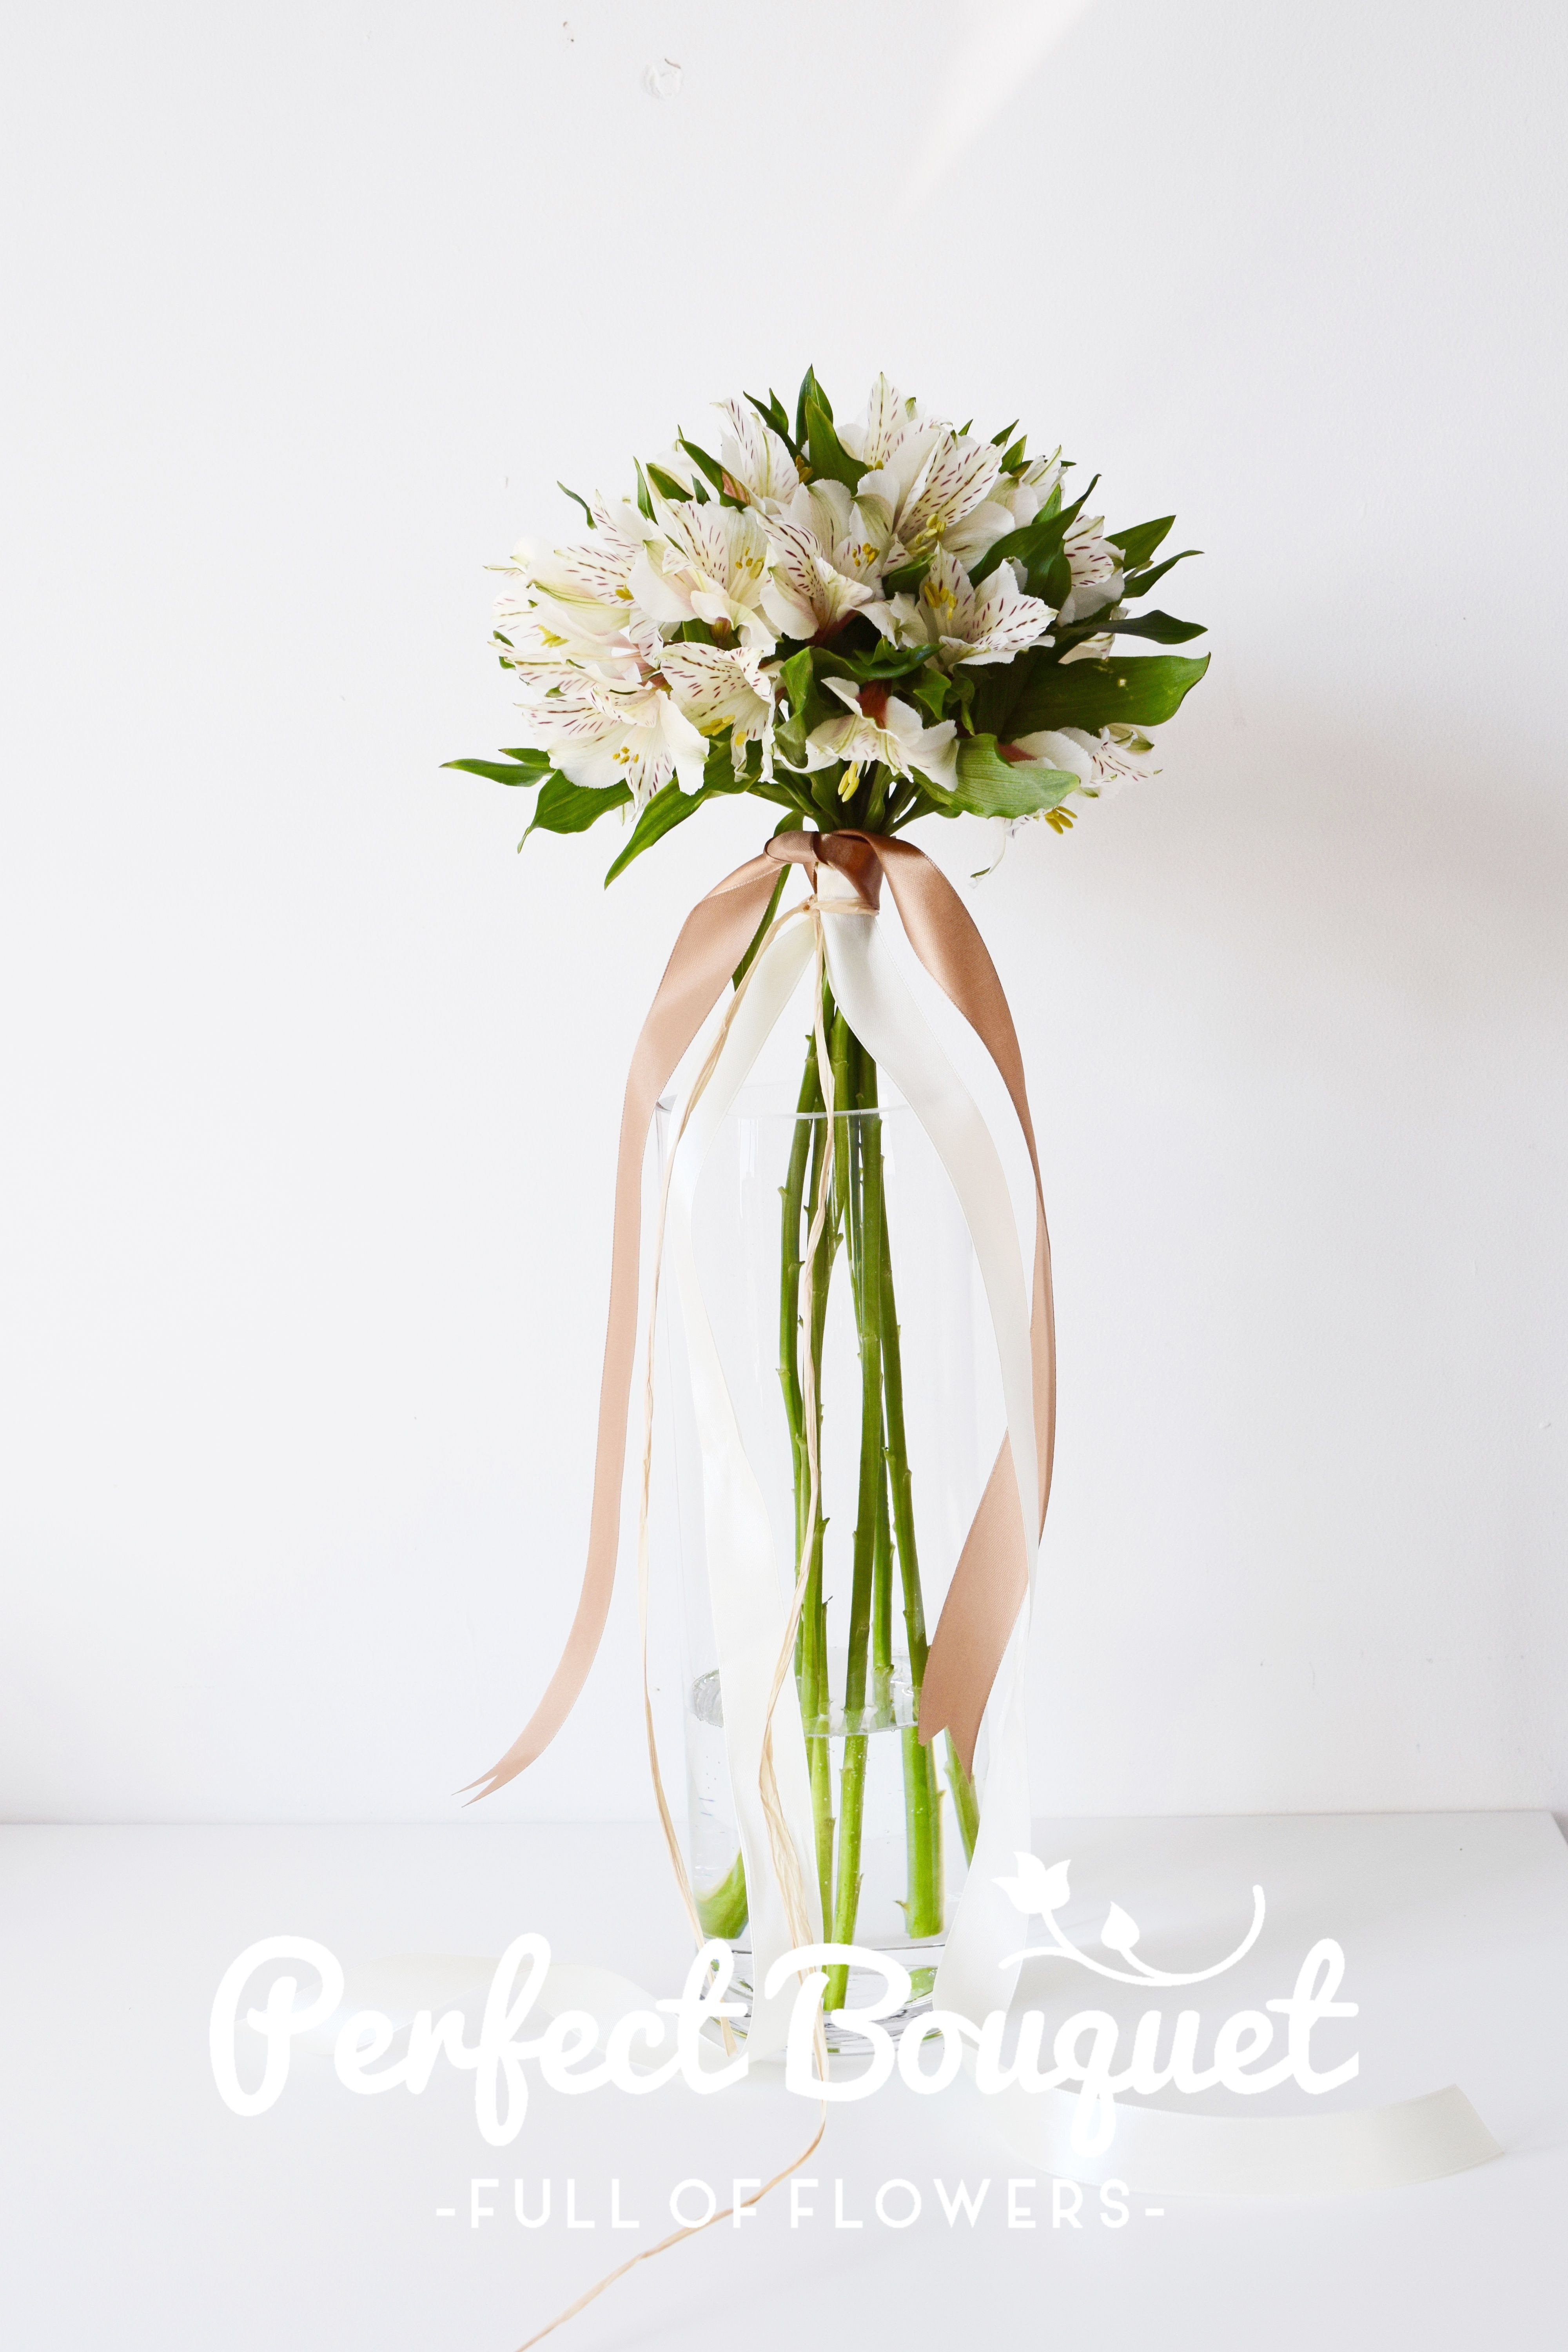 17 Ideal Ftd Cross Vase 2022 free download ftd cross vase of alstroemeria wedding centerpieces xc294xc296xc2a8 xxc29c xc29exc298xc299 pinterest wedding with alstroemeria wedding centerpieces